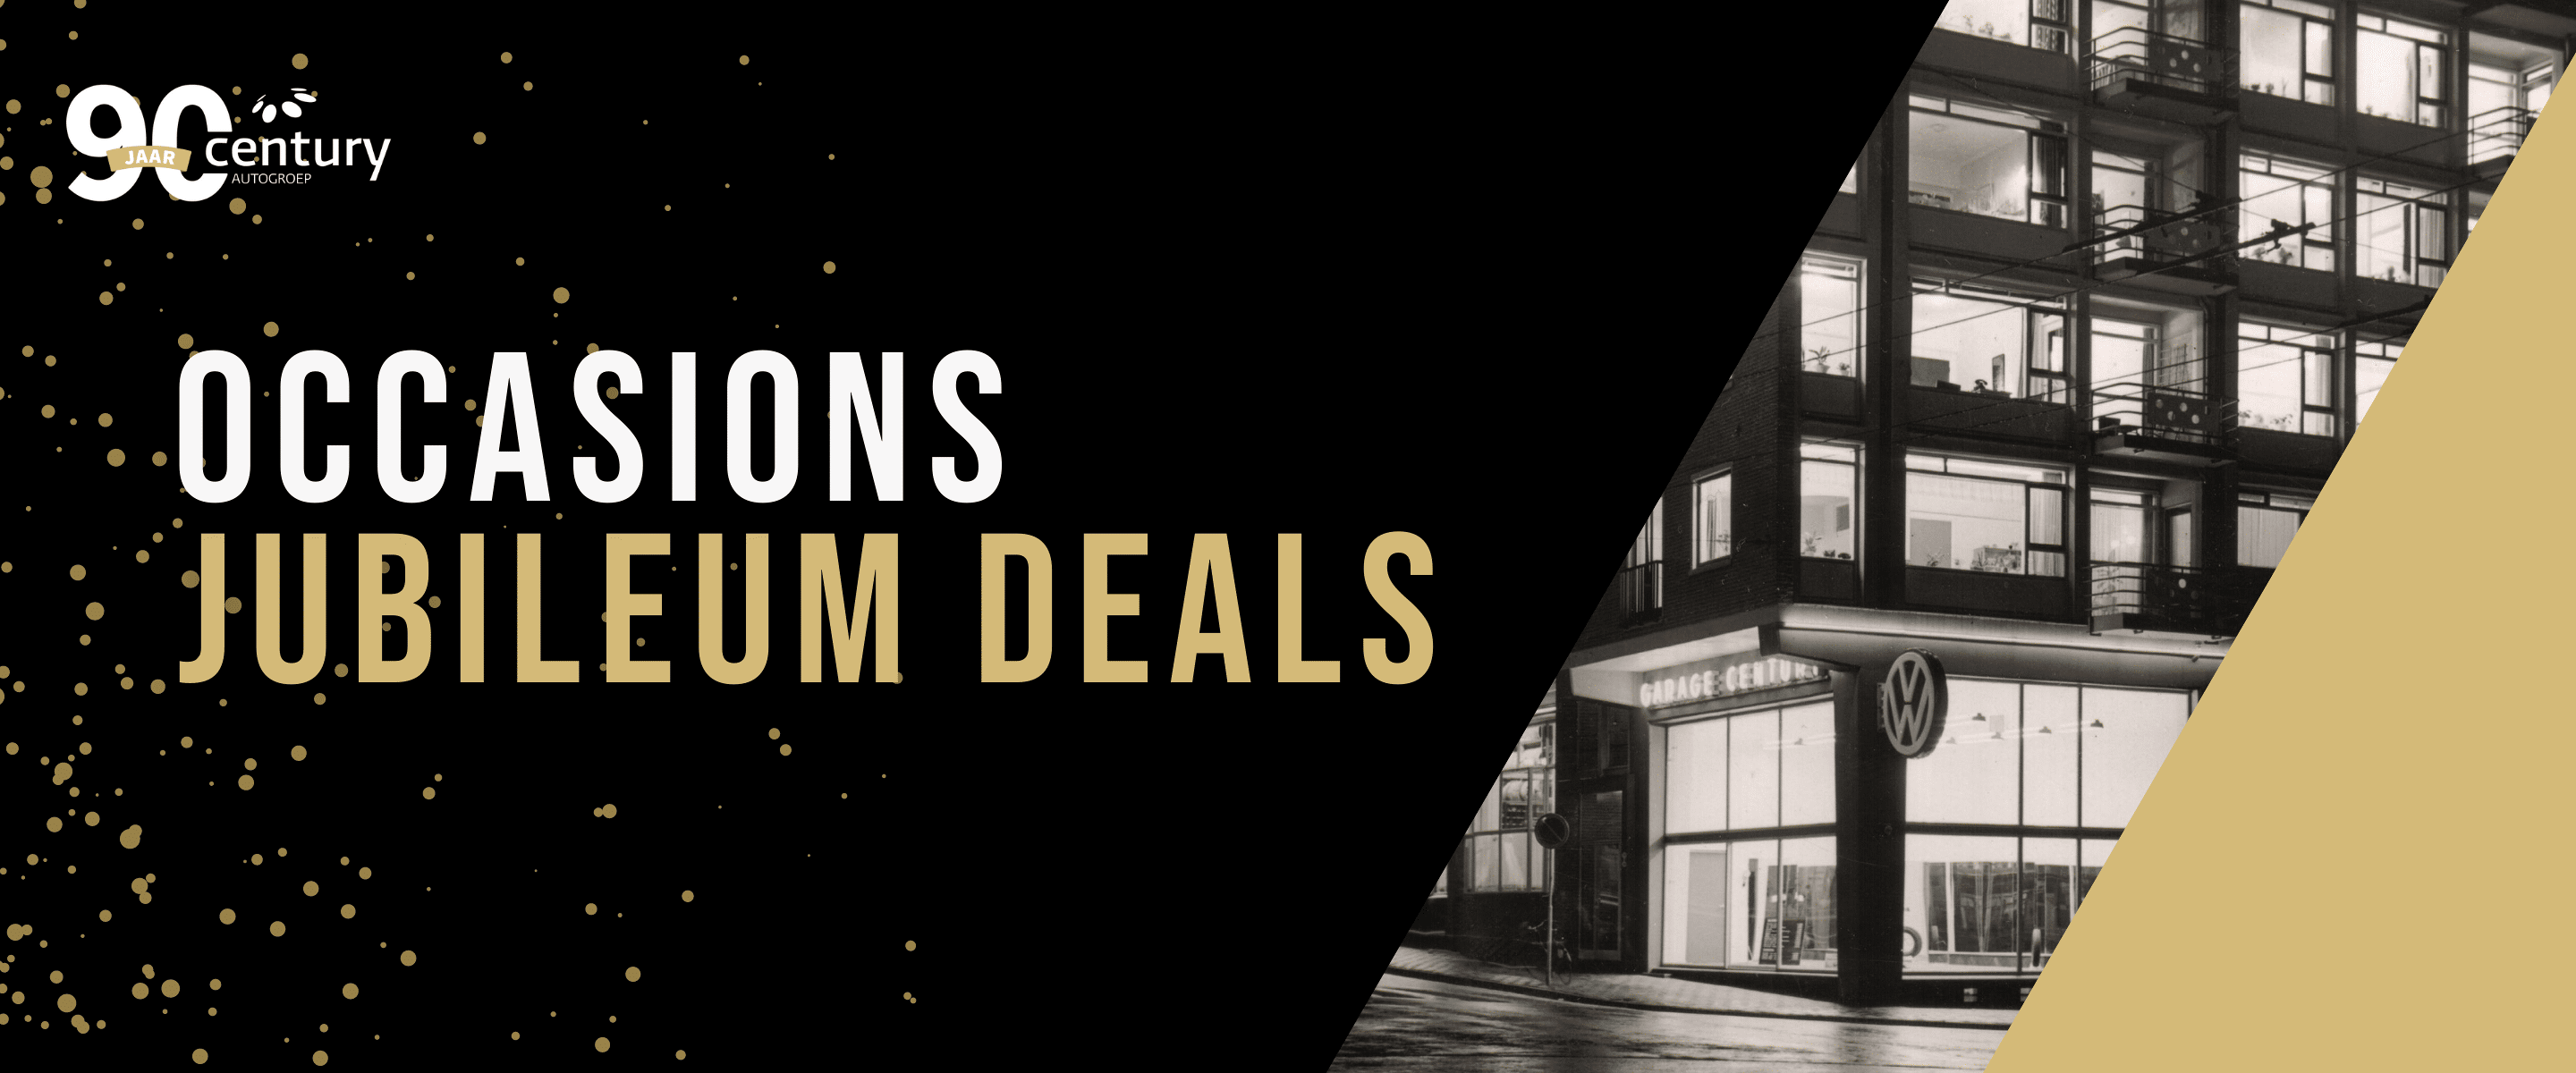 Occasions - Jubileum Deals